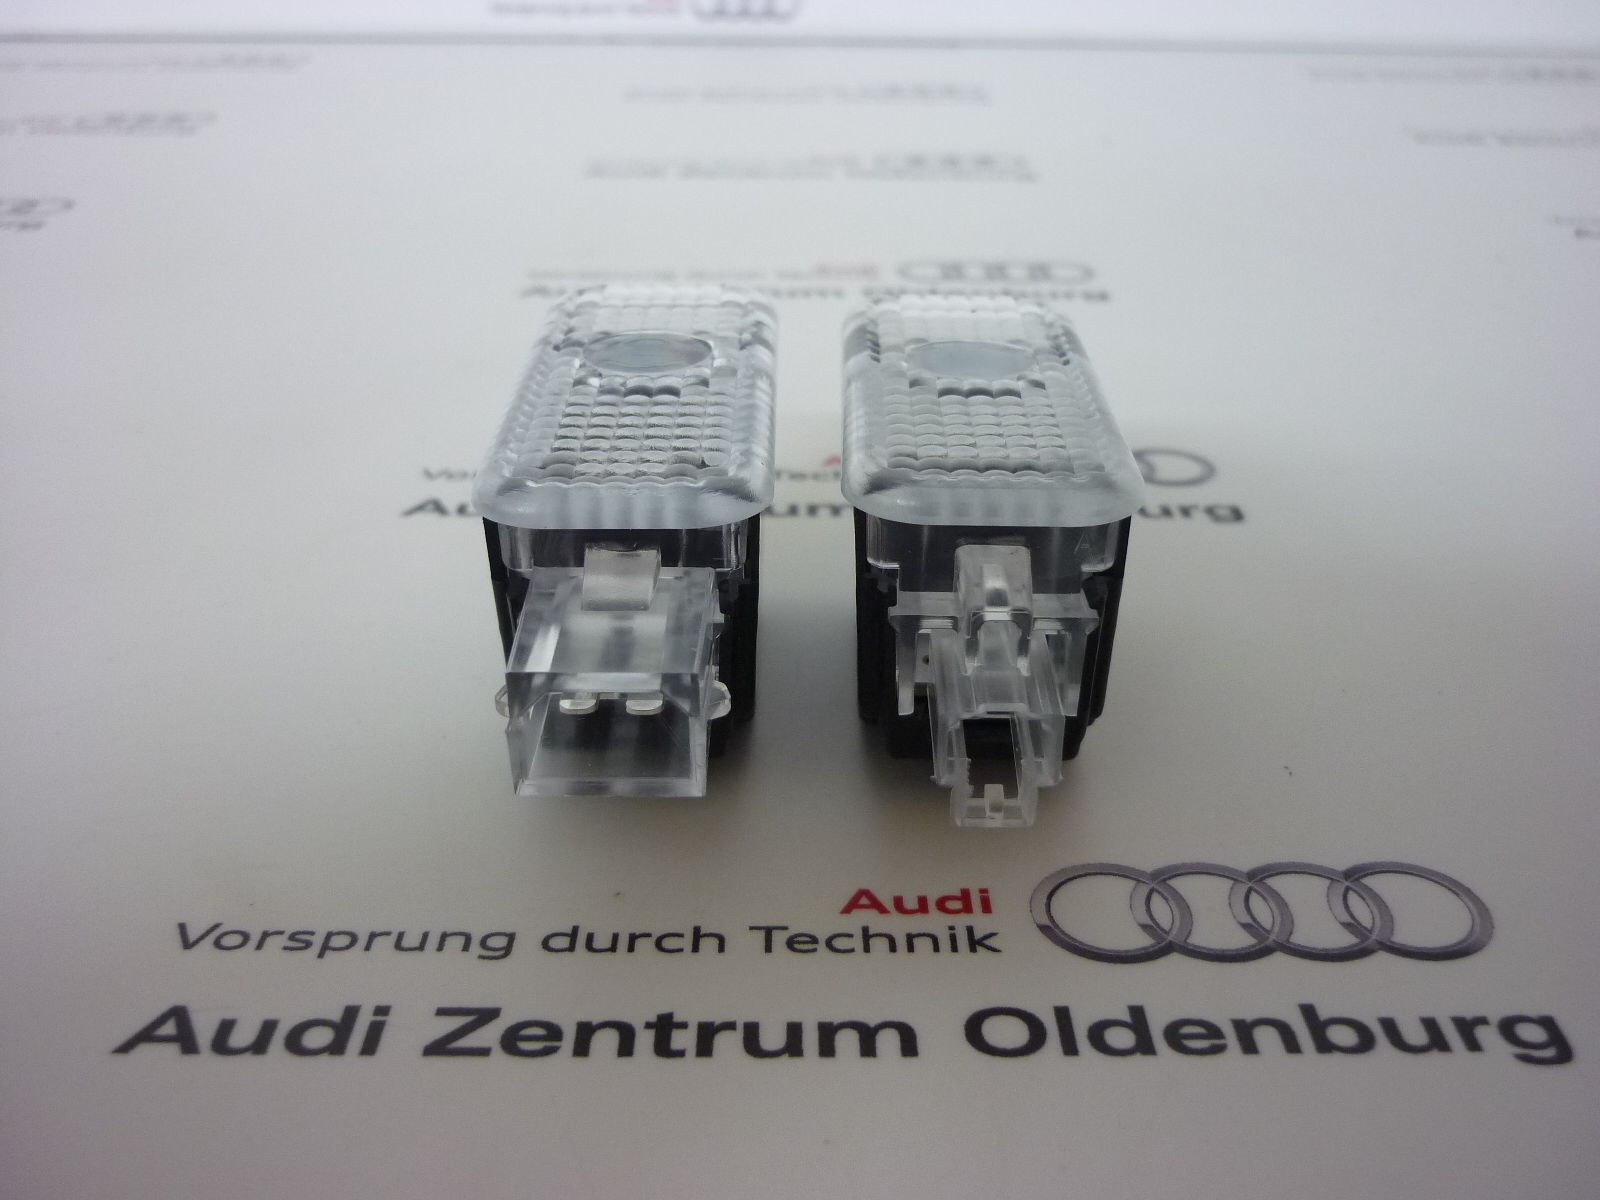 Original Audi S Sport LED Einstiegsbeleuchtung Tür Logo Projektor viele  Audi´s